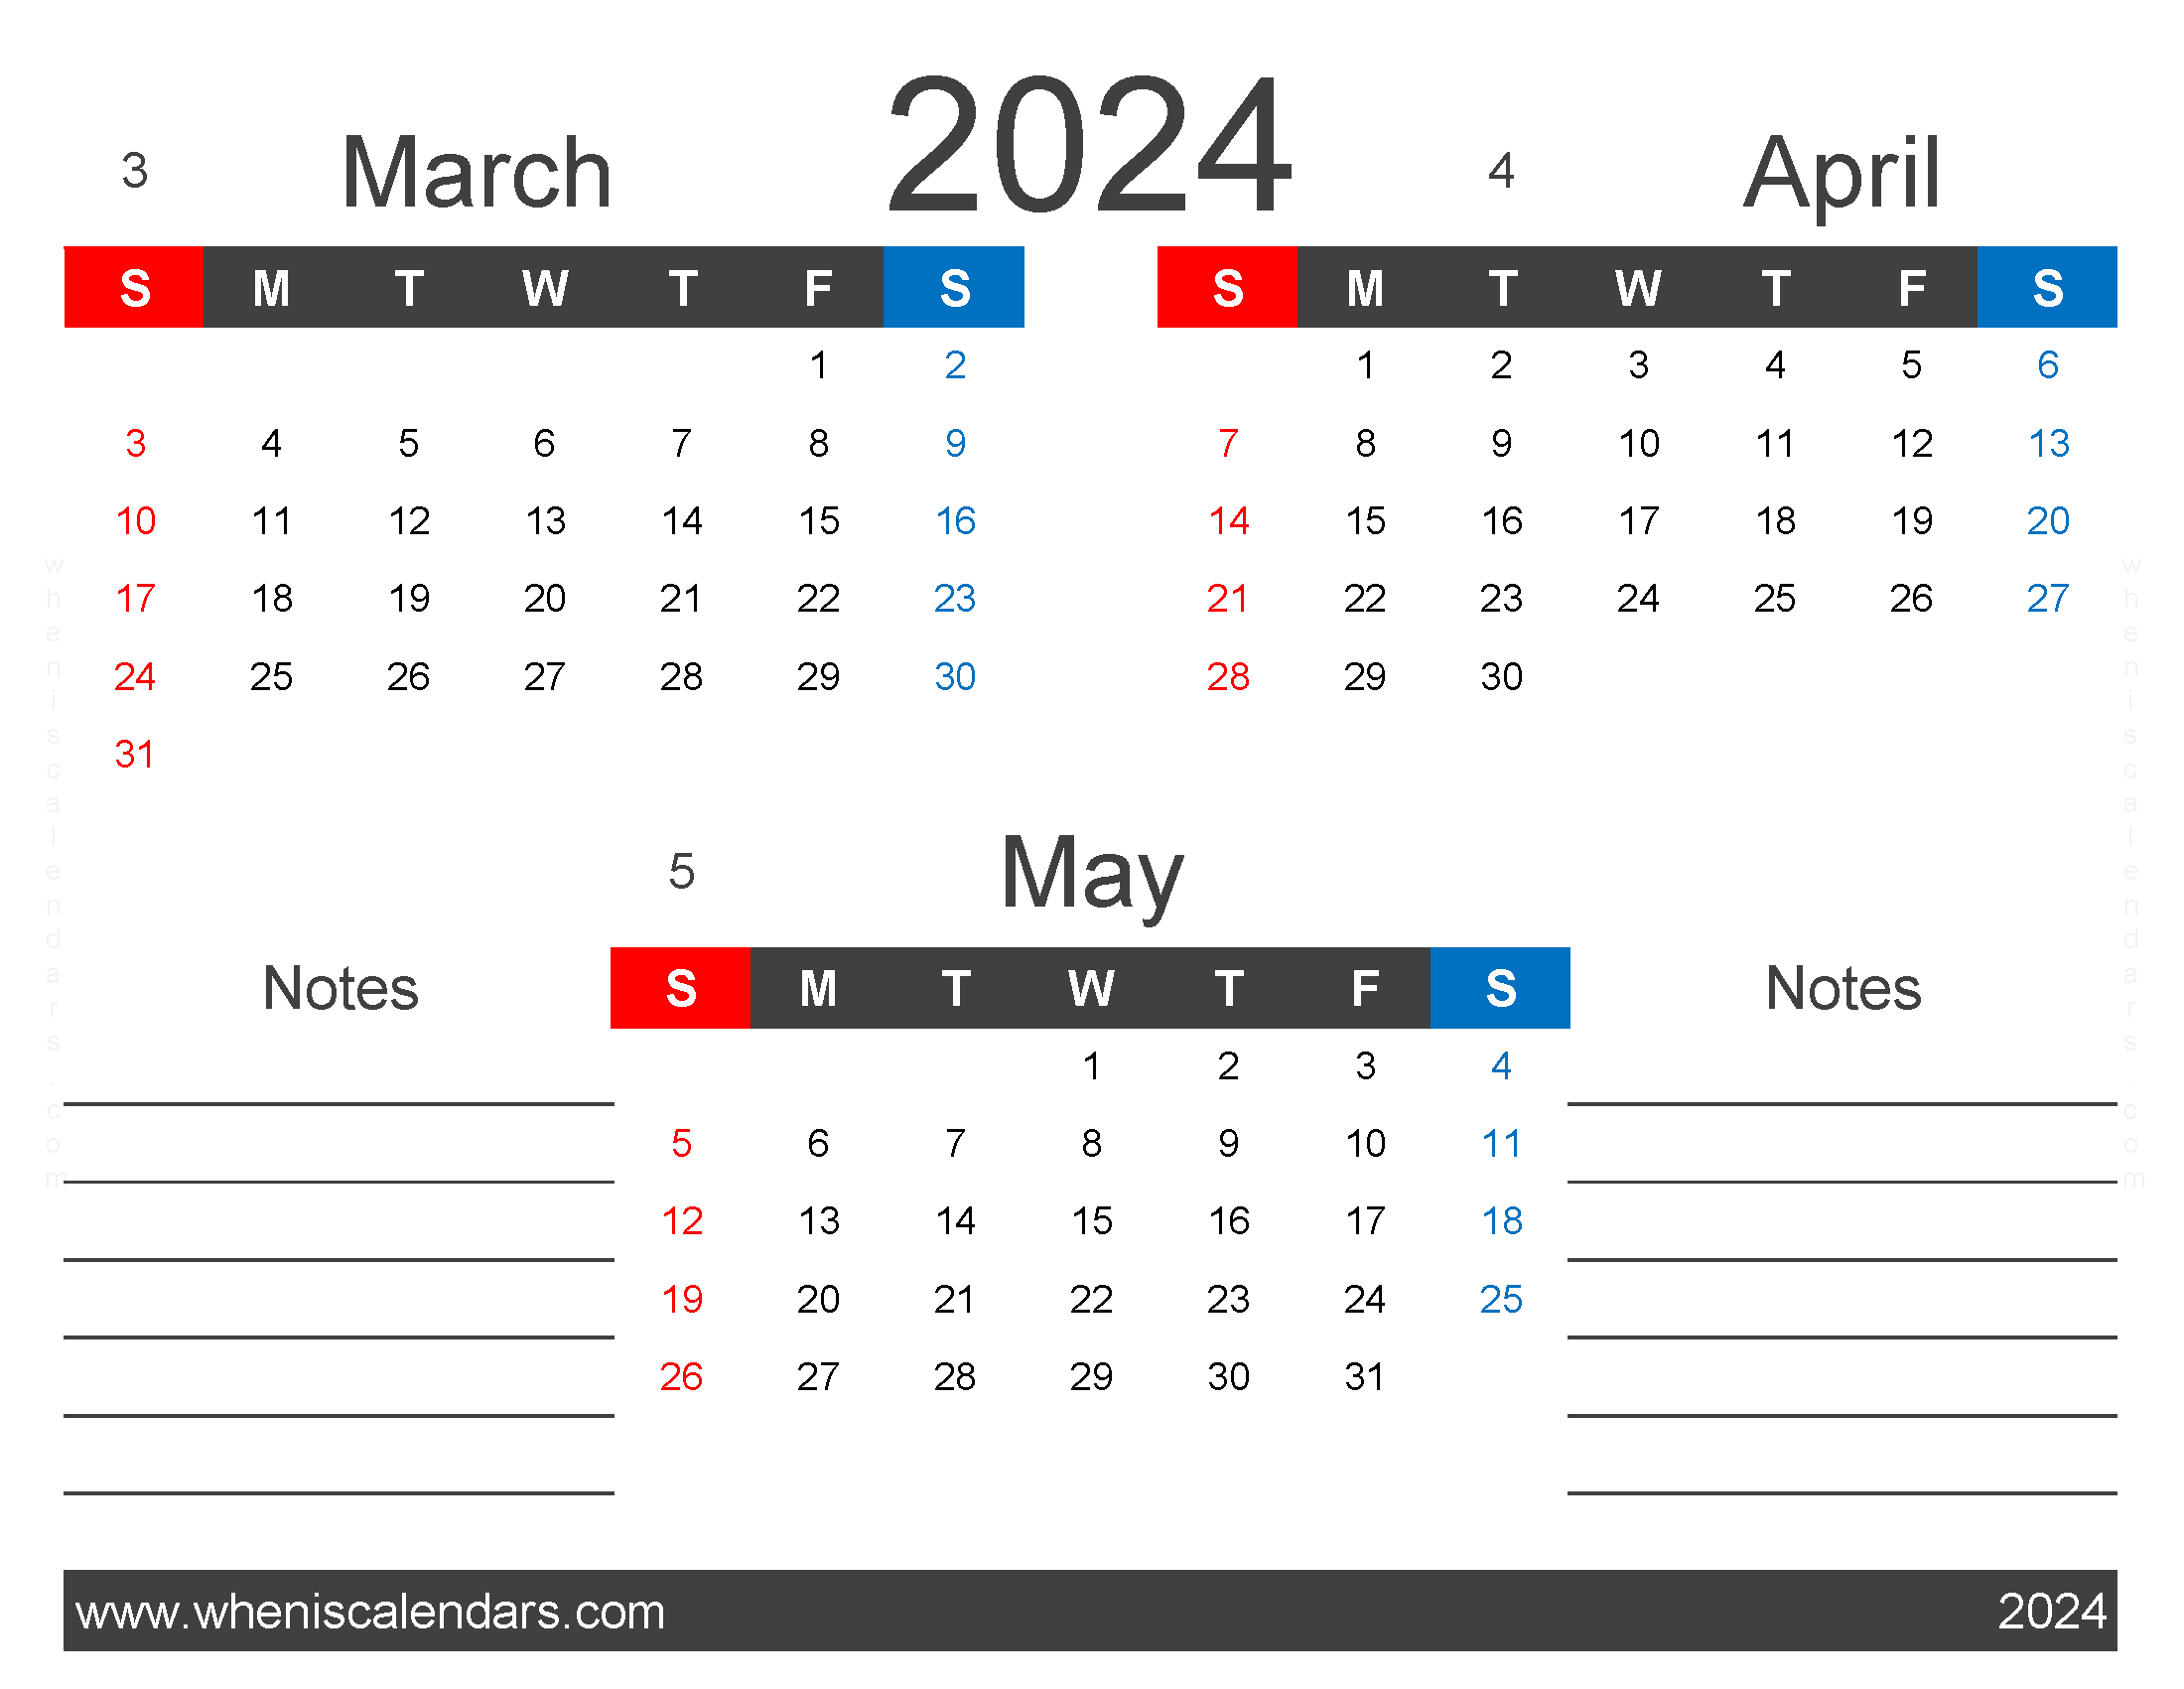 Download calendar 2024 Mar Apr May MAM423